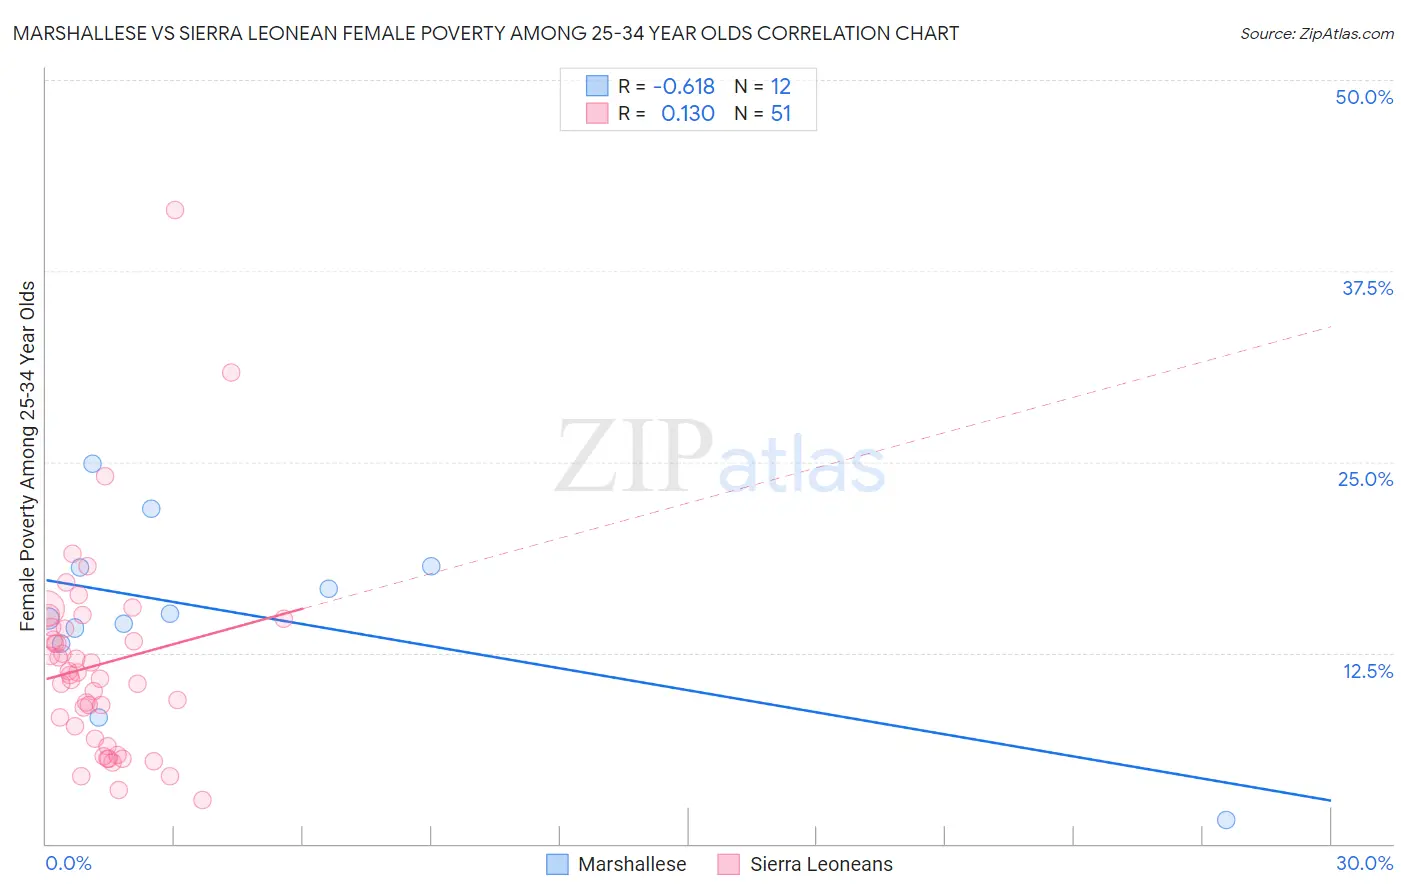 Marshallese vs Sierra Leonean Female Poverty Among 25-34 Year Olds